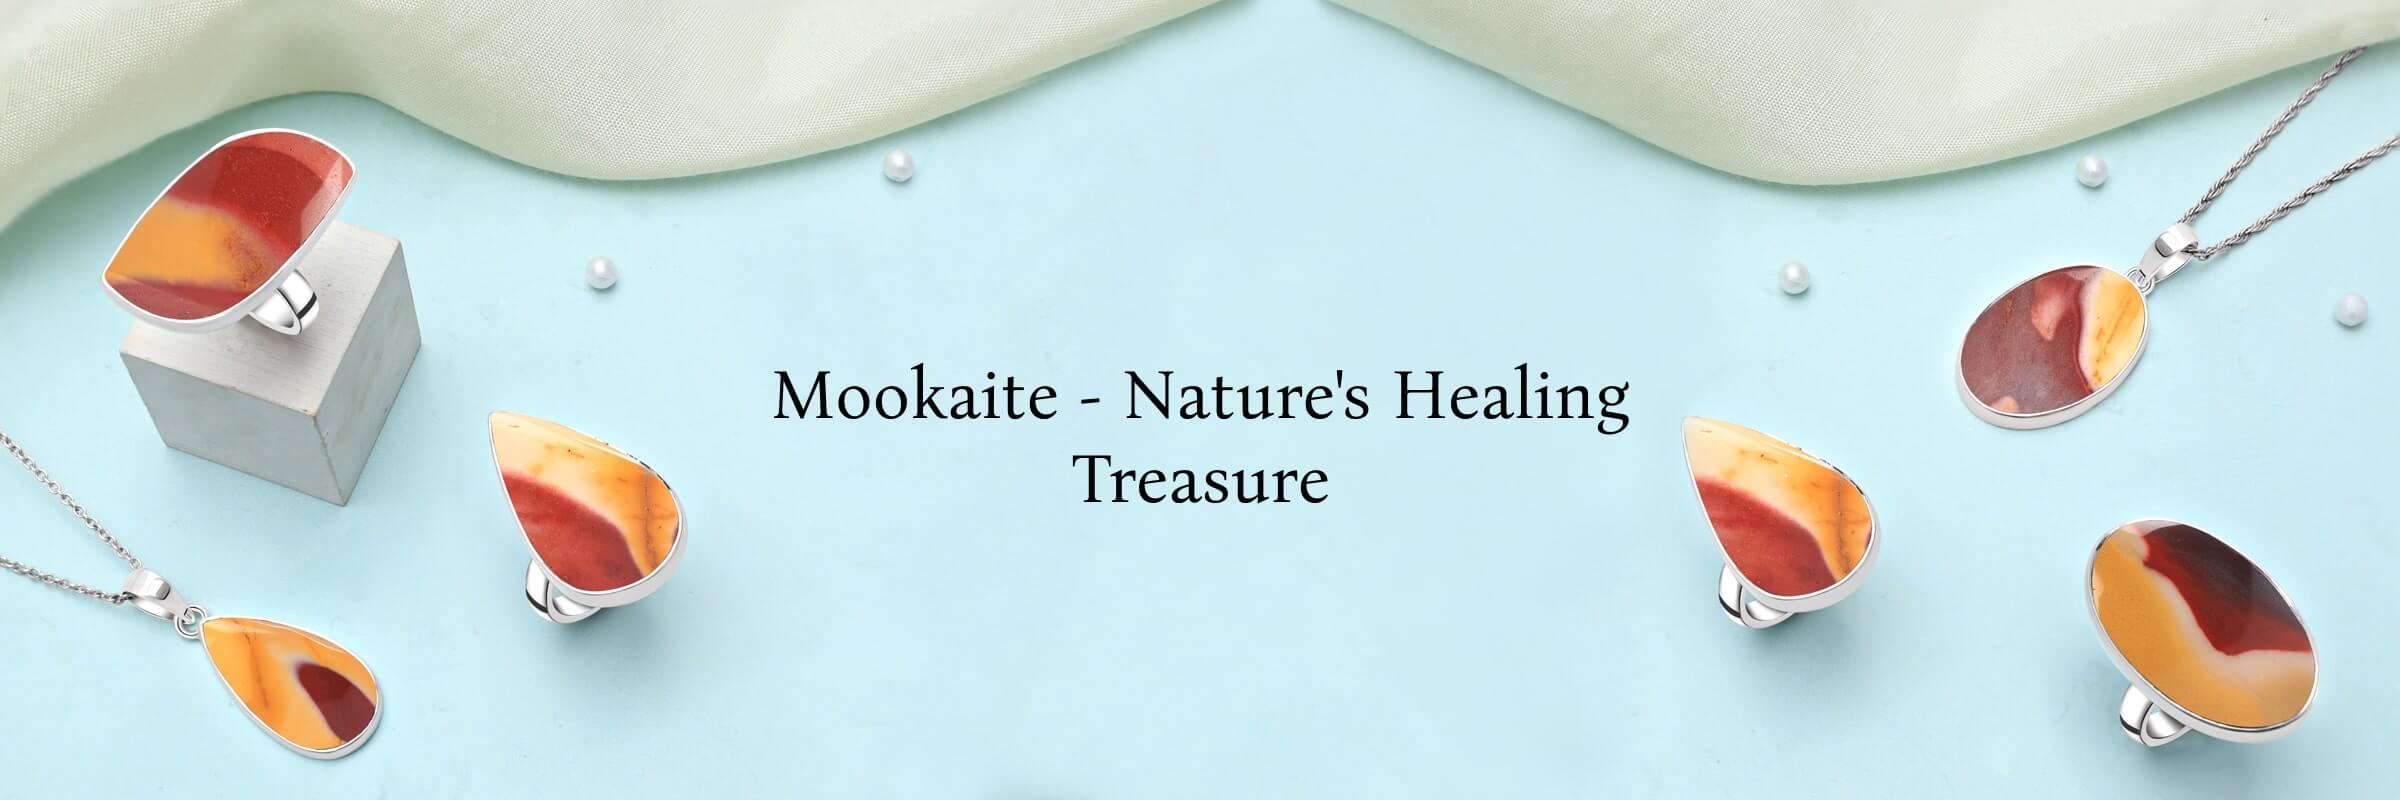 Mookaite Healing Properties